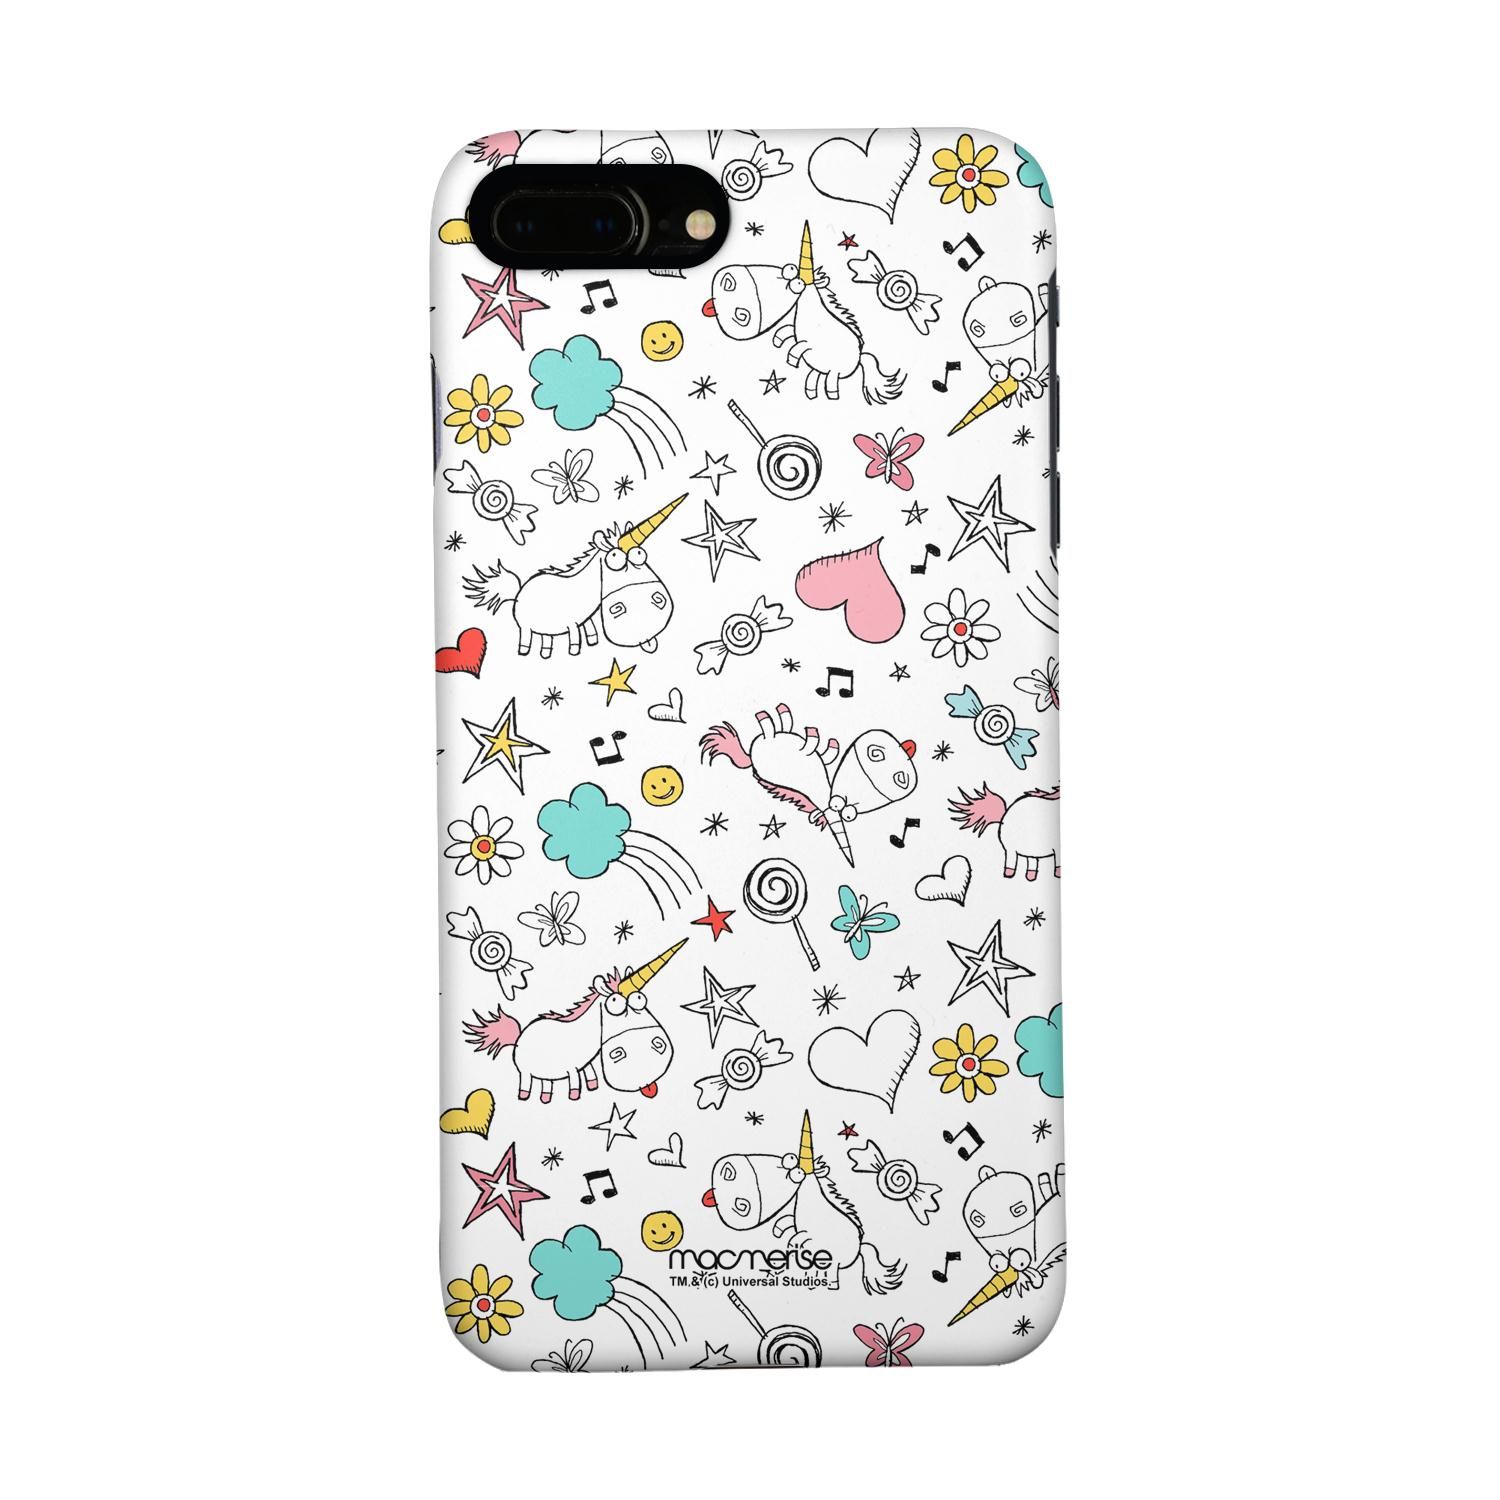 Buy Dreamy Pattern - Sleek Phone Case for iPhone 7 Plus Online